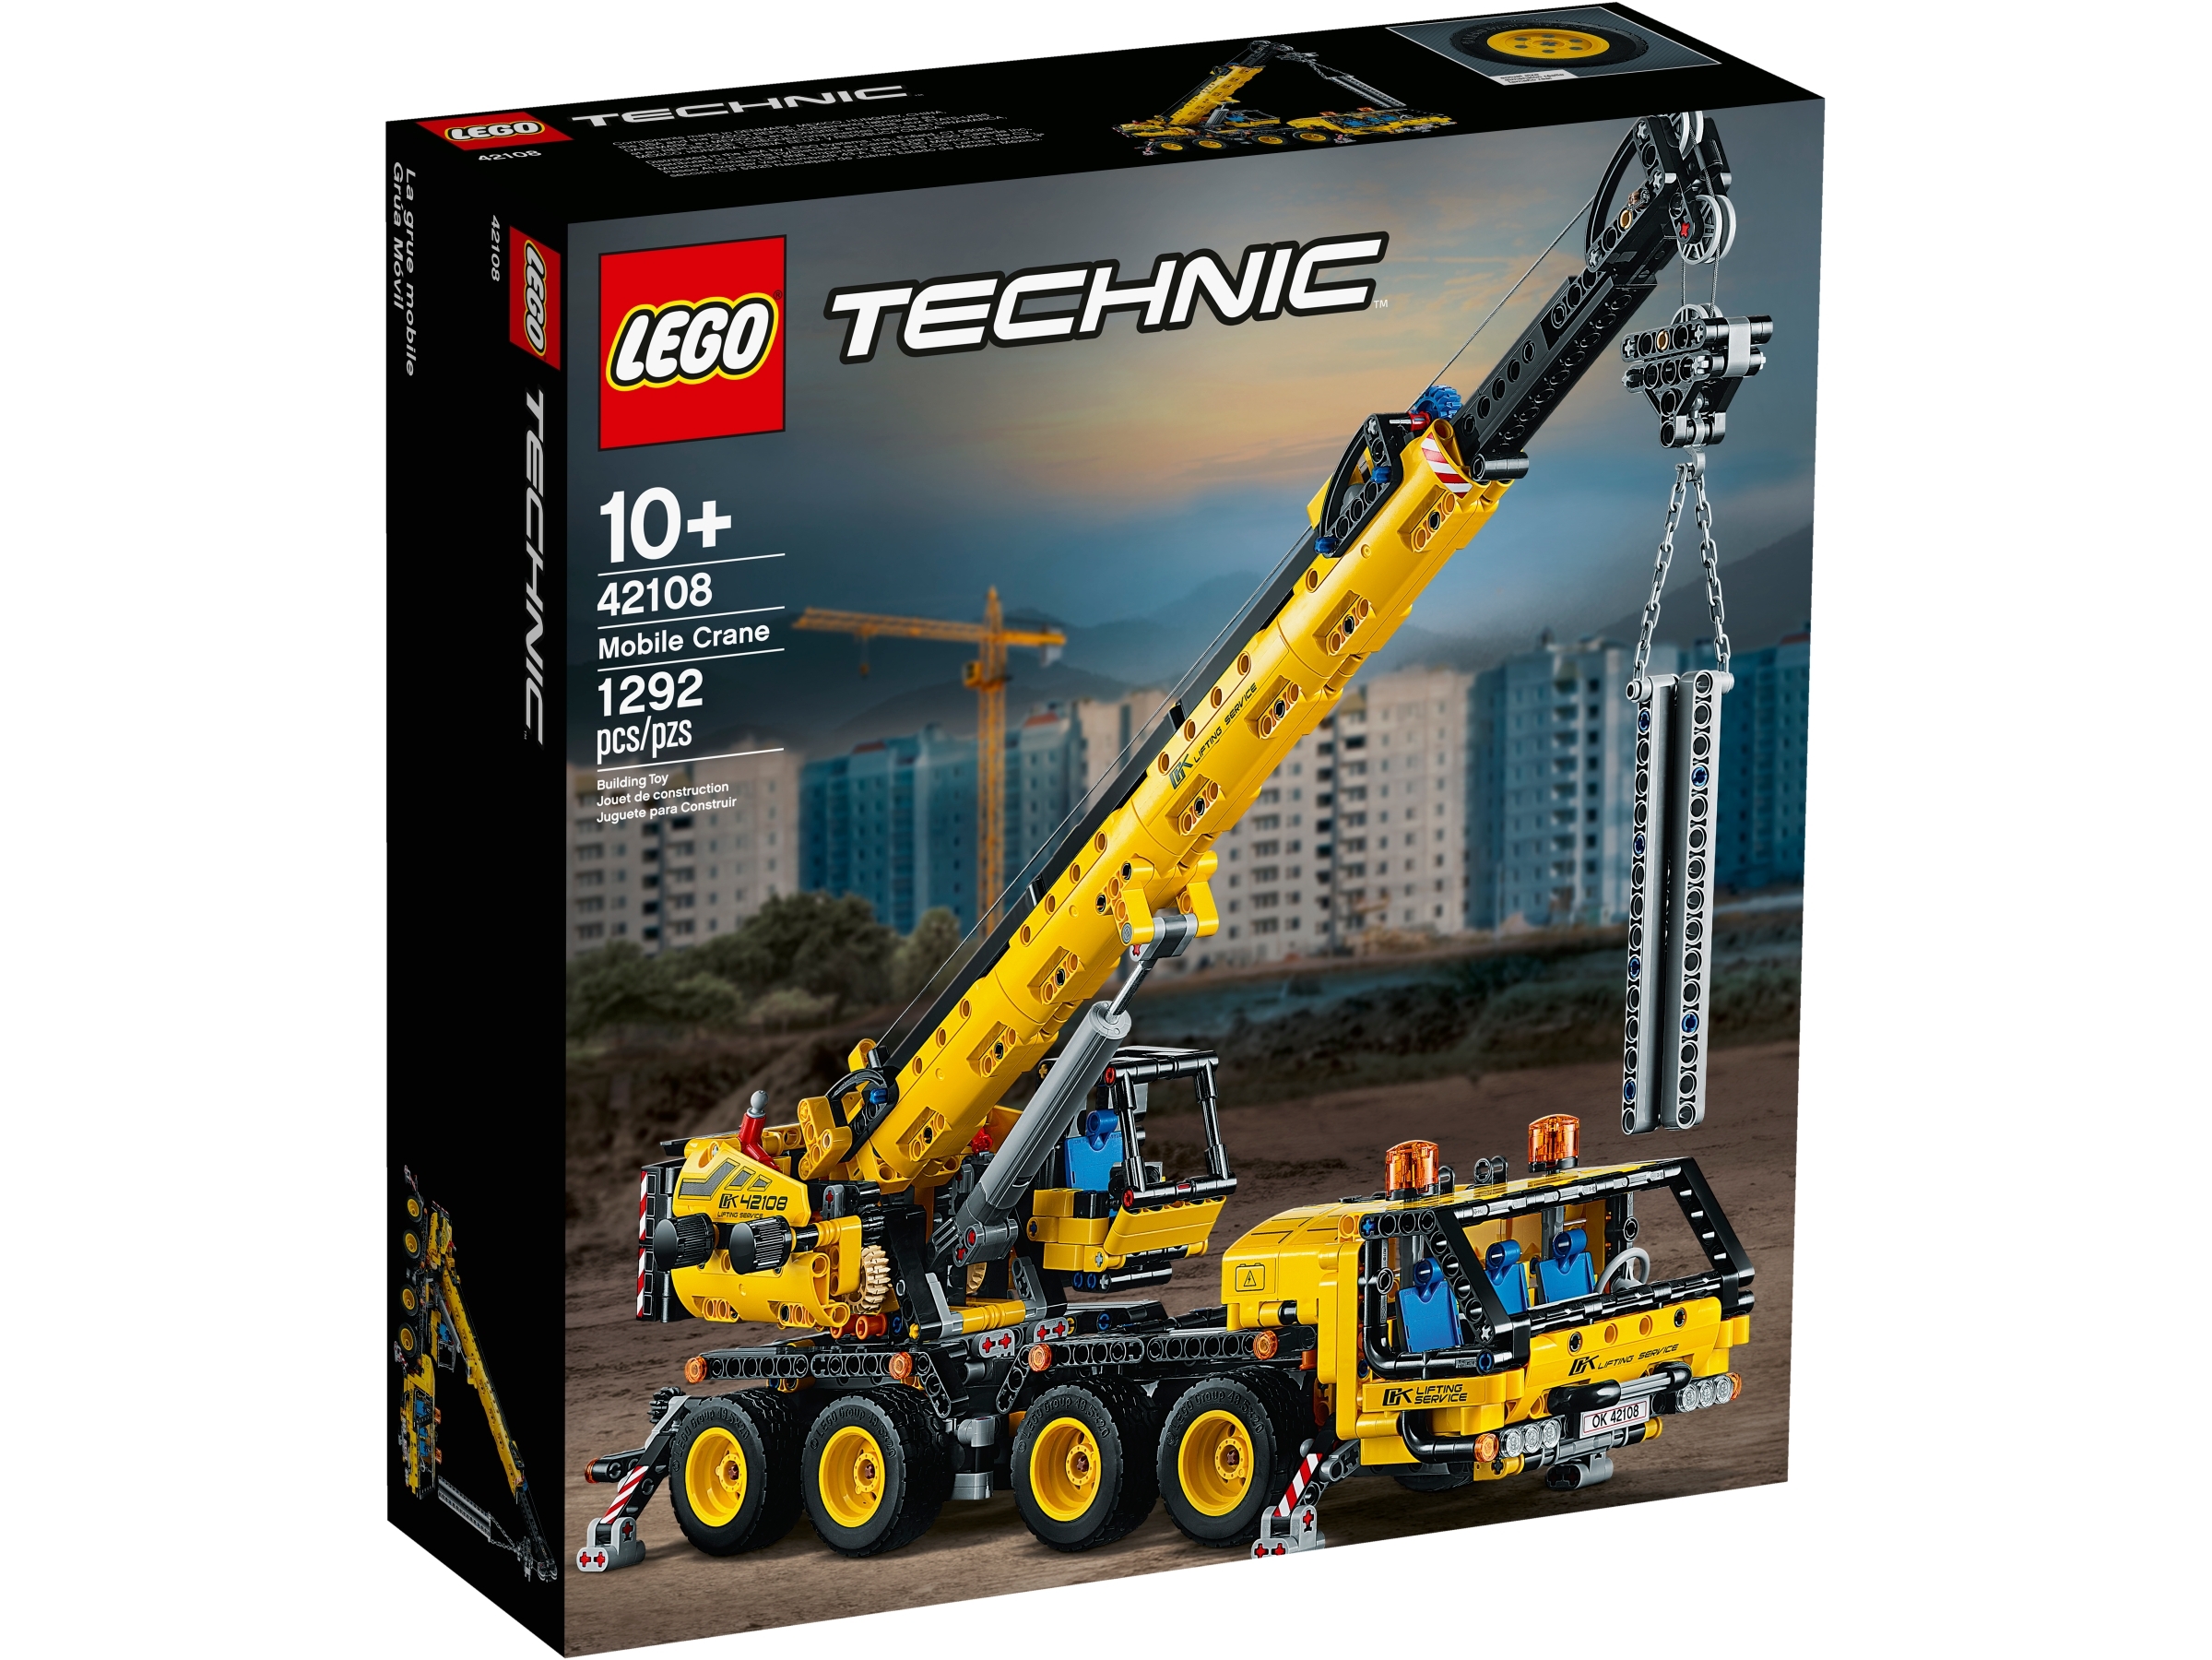 Lego Technic Mobile Crane Toys